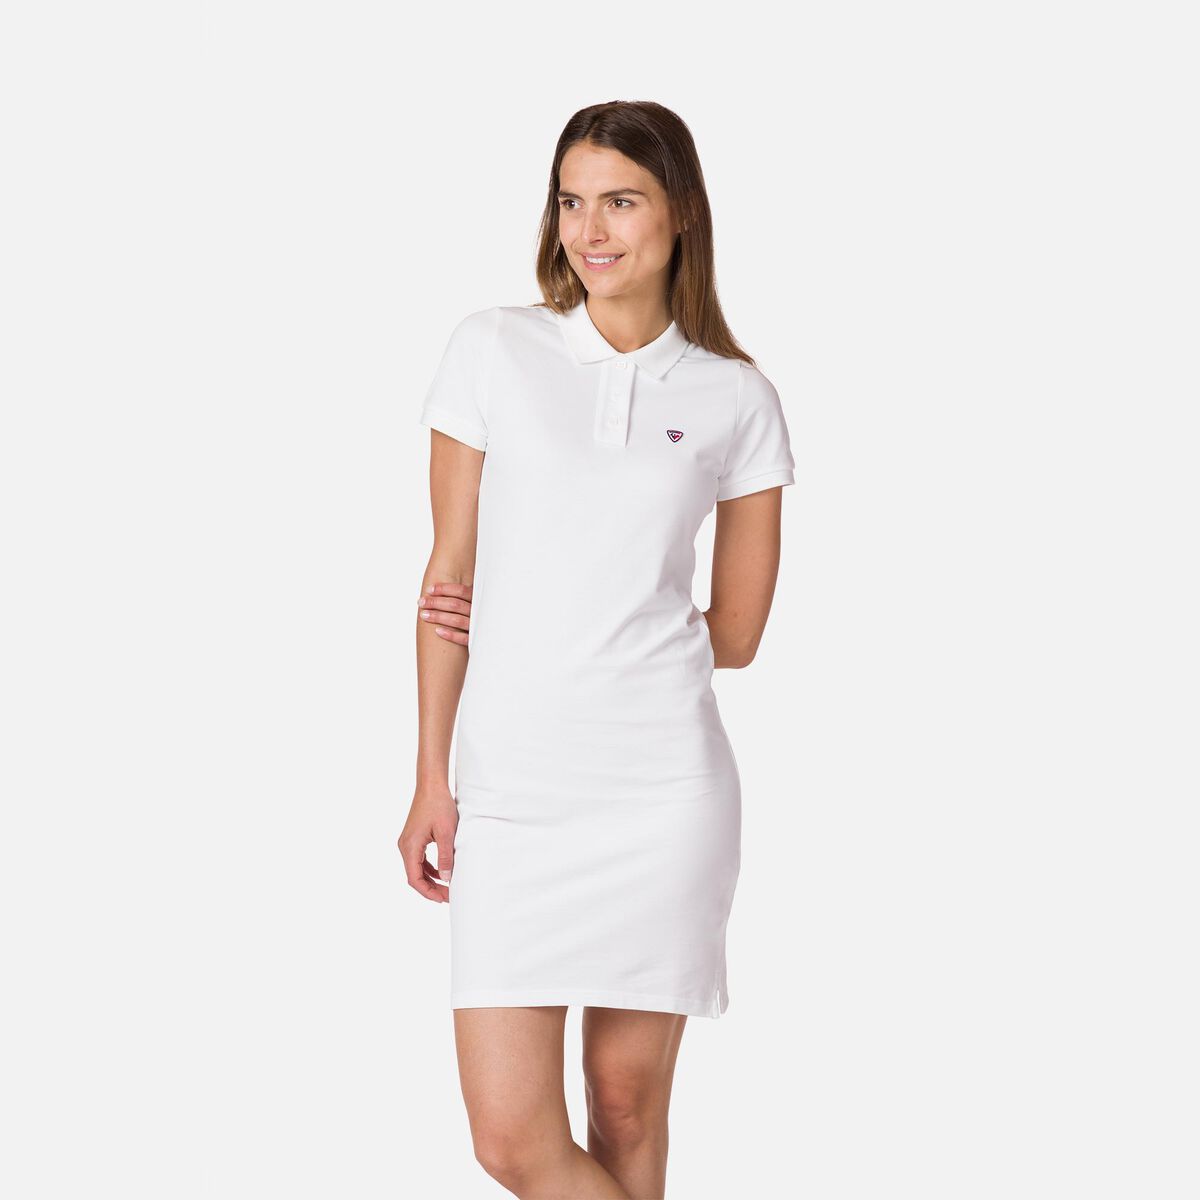 Rossignol Women's polo dress White